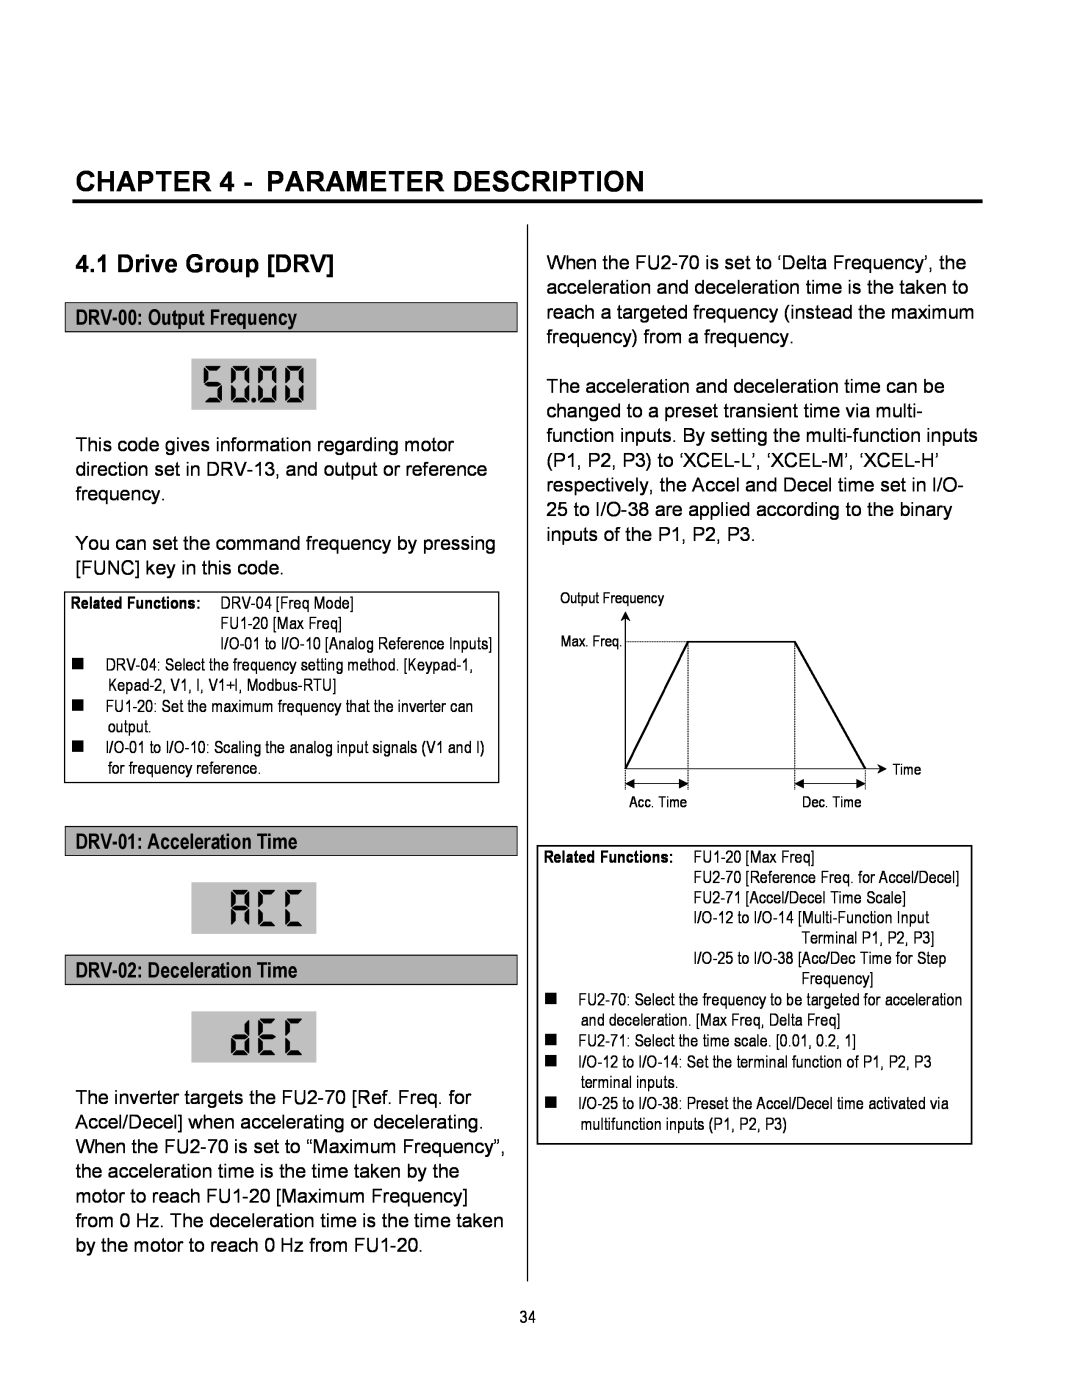 Cleveland Range inverter manual Parameter Description, Drive Group DRV, DRV-00 Output Frequency 